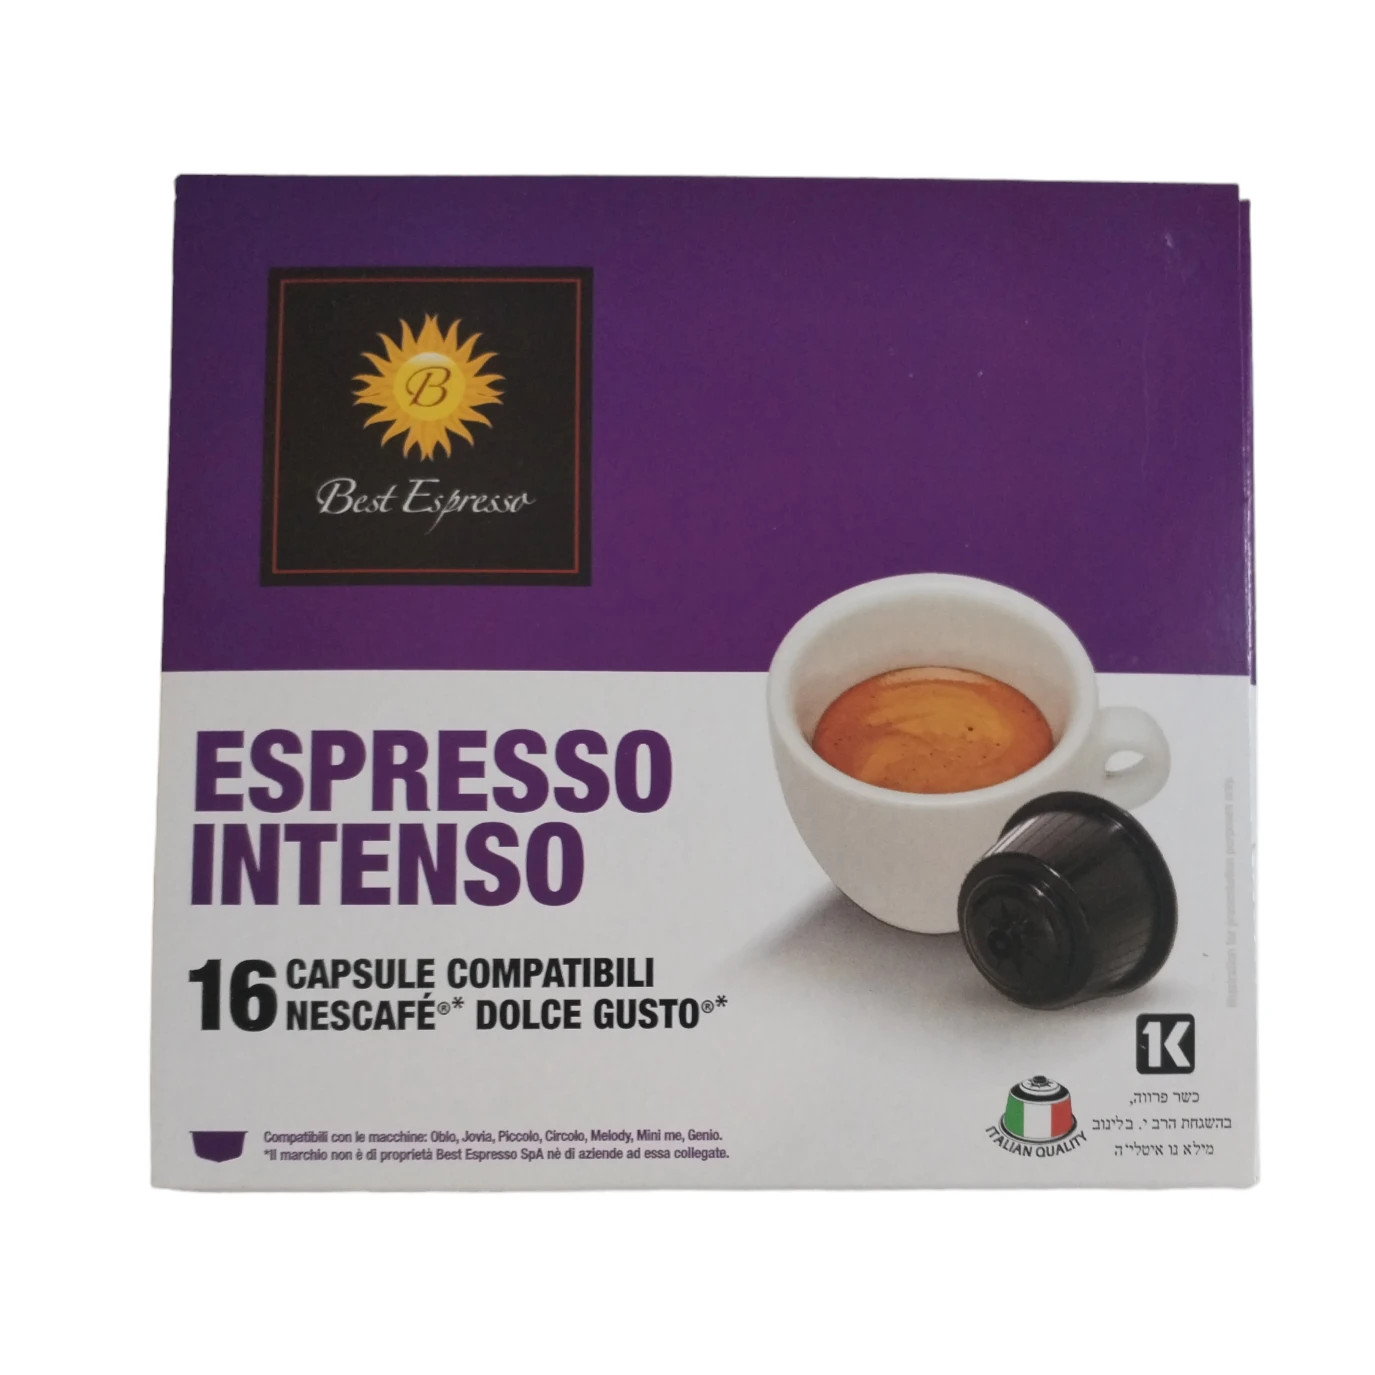 1553-espressointensodolcegusto-17066123255977.png